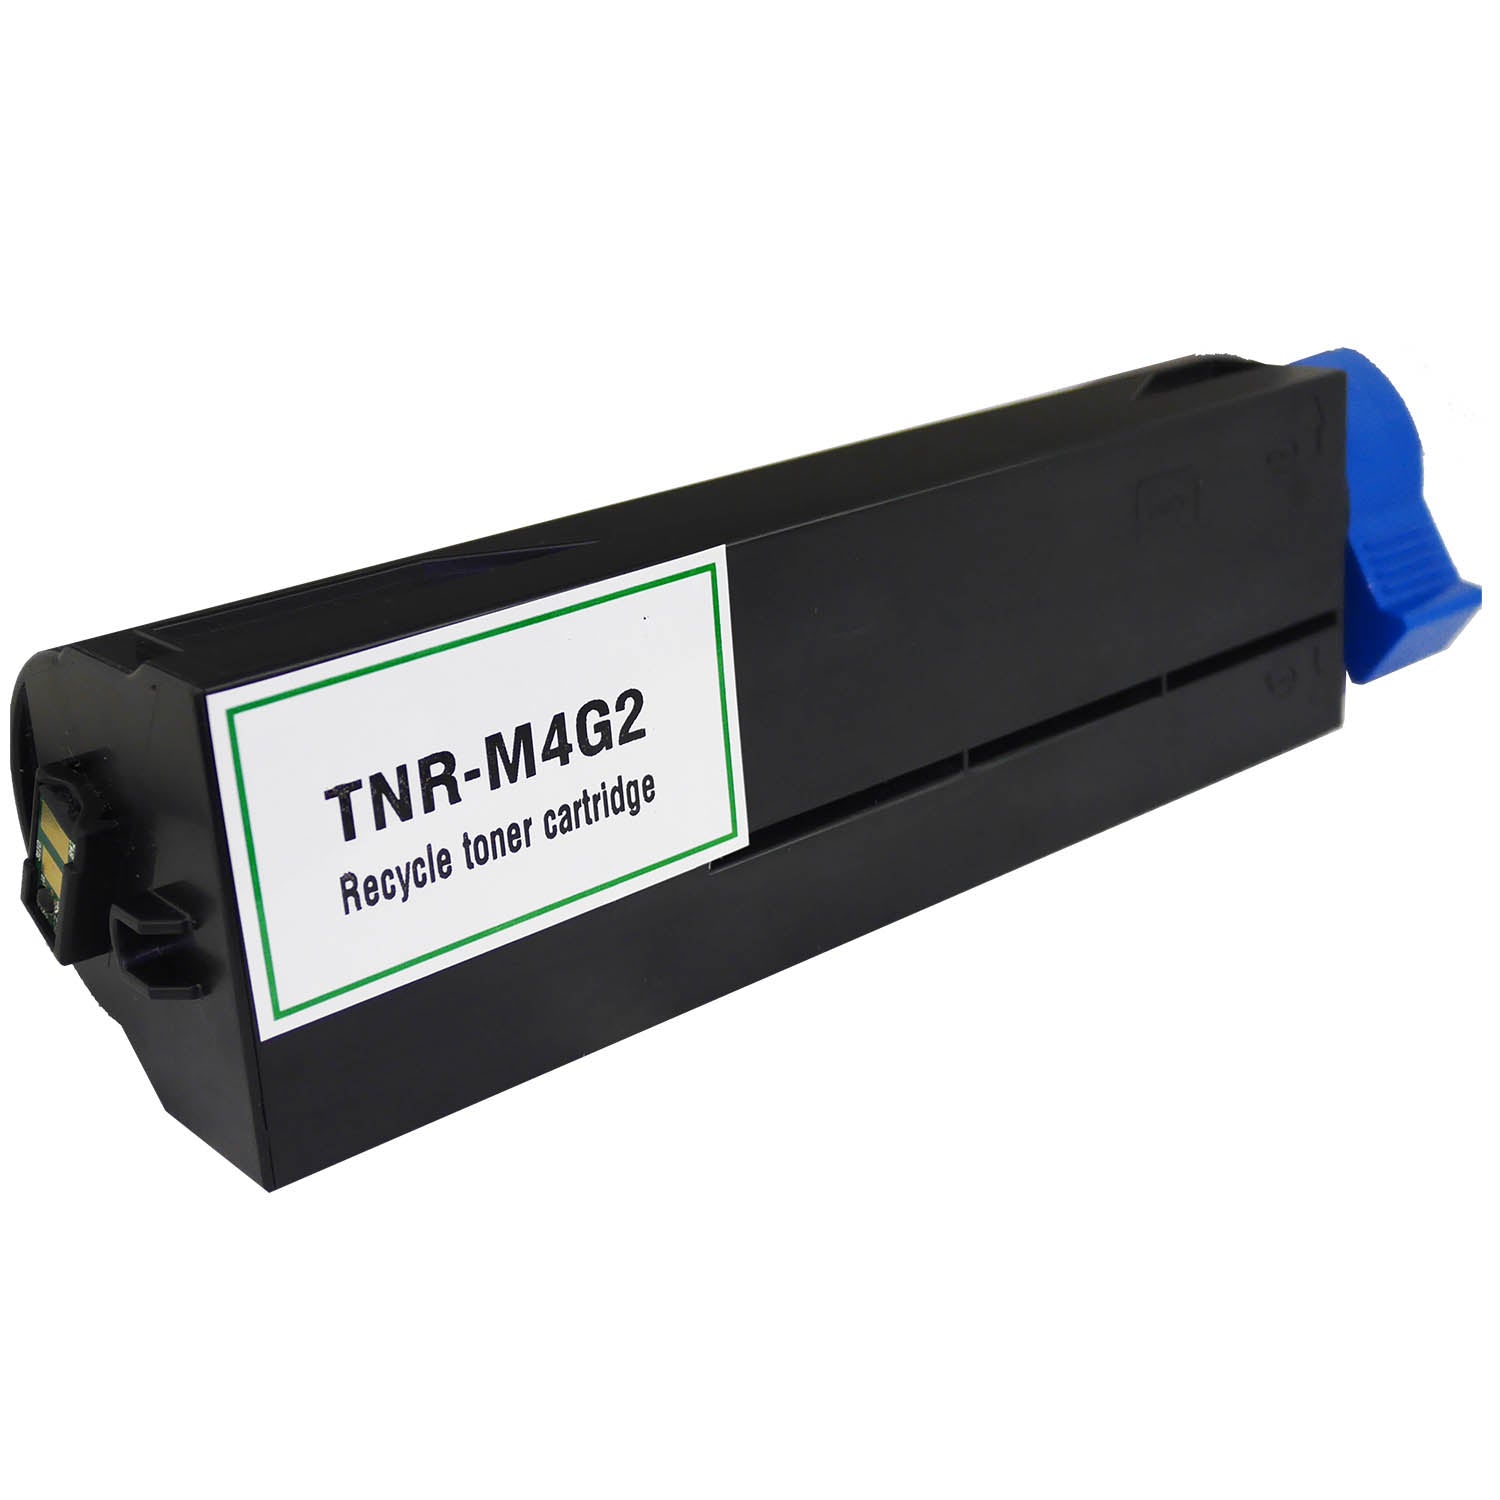 OKI用 TNR-M4G2 リサイクルトナー ブラック 大容量